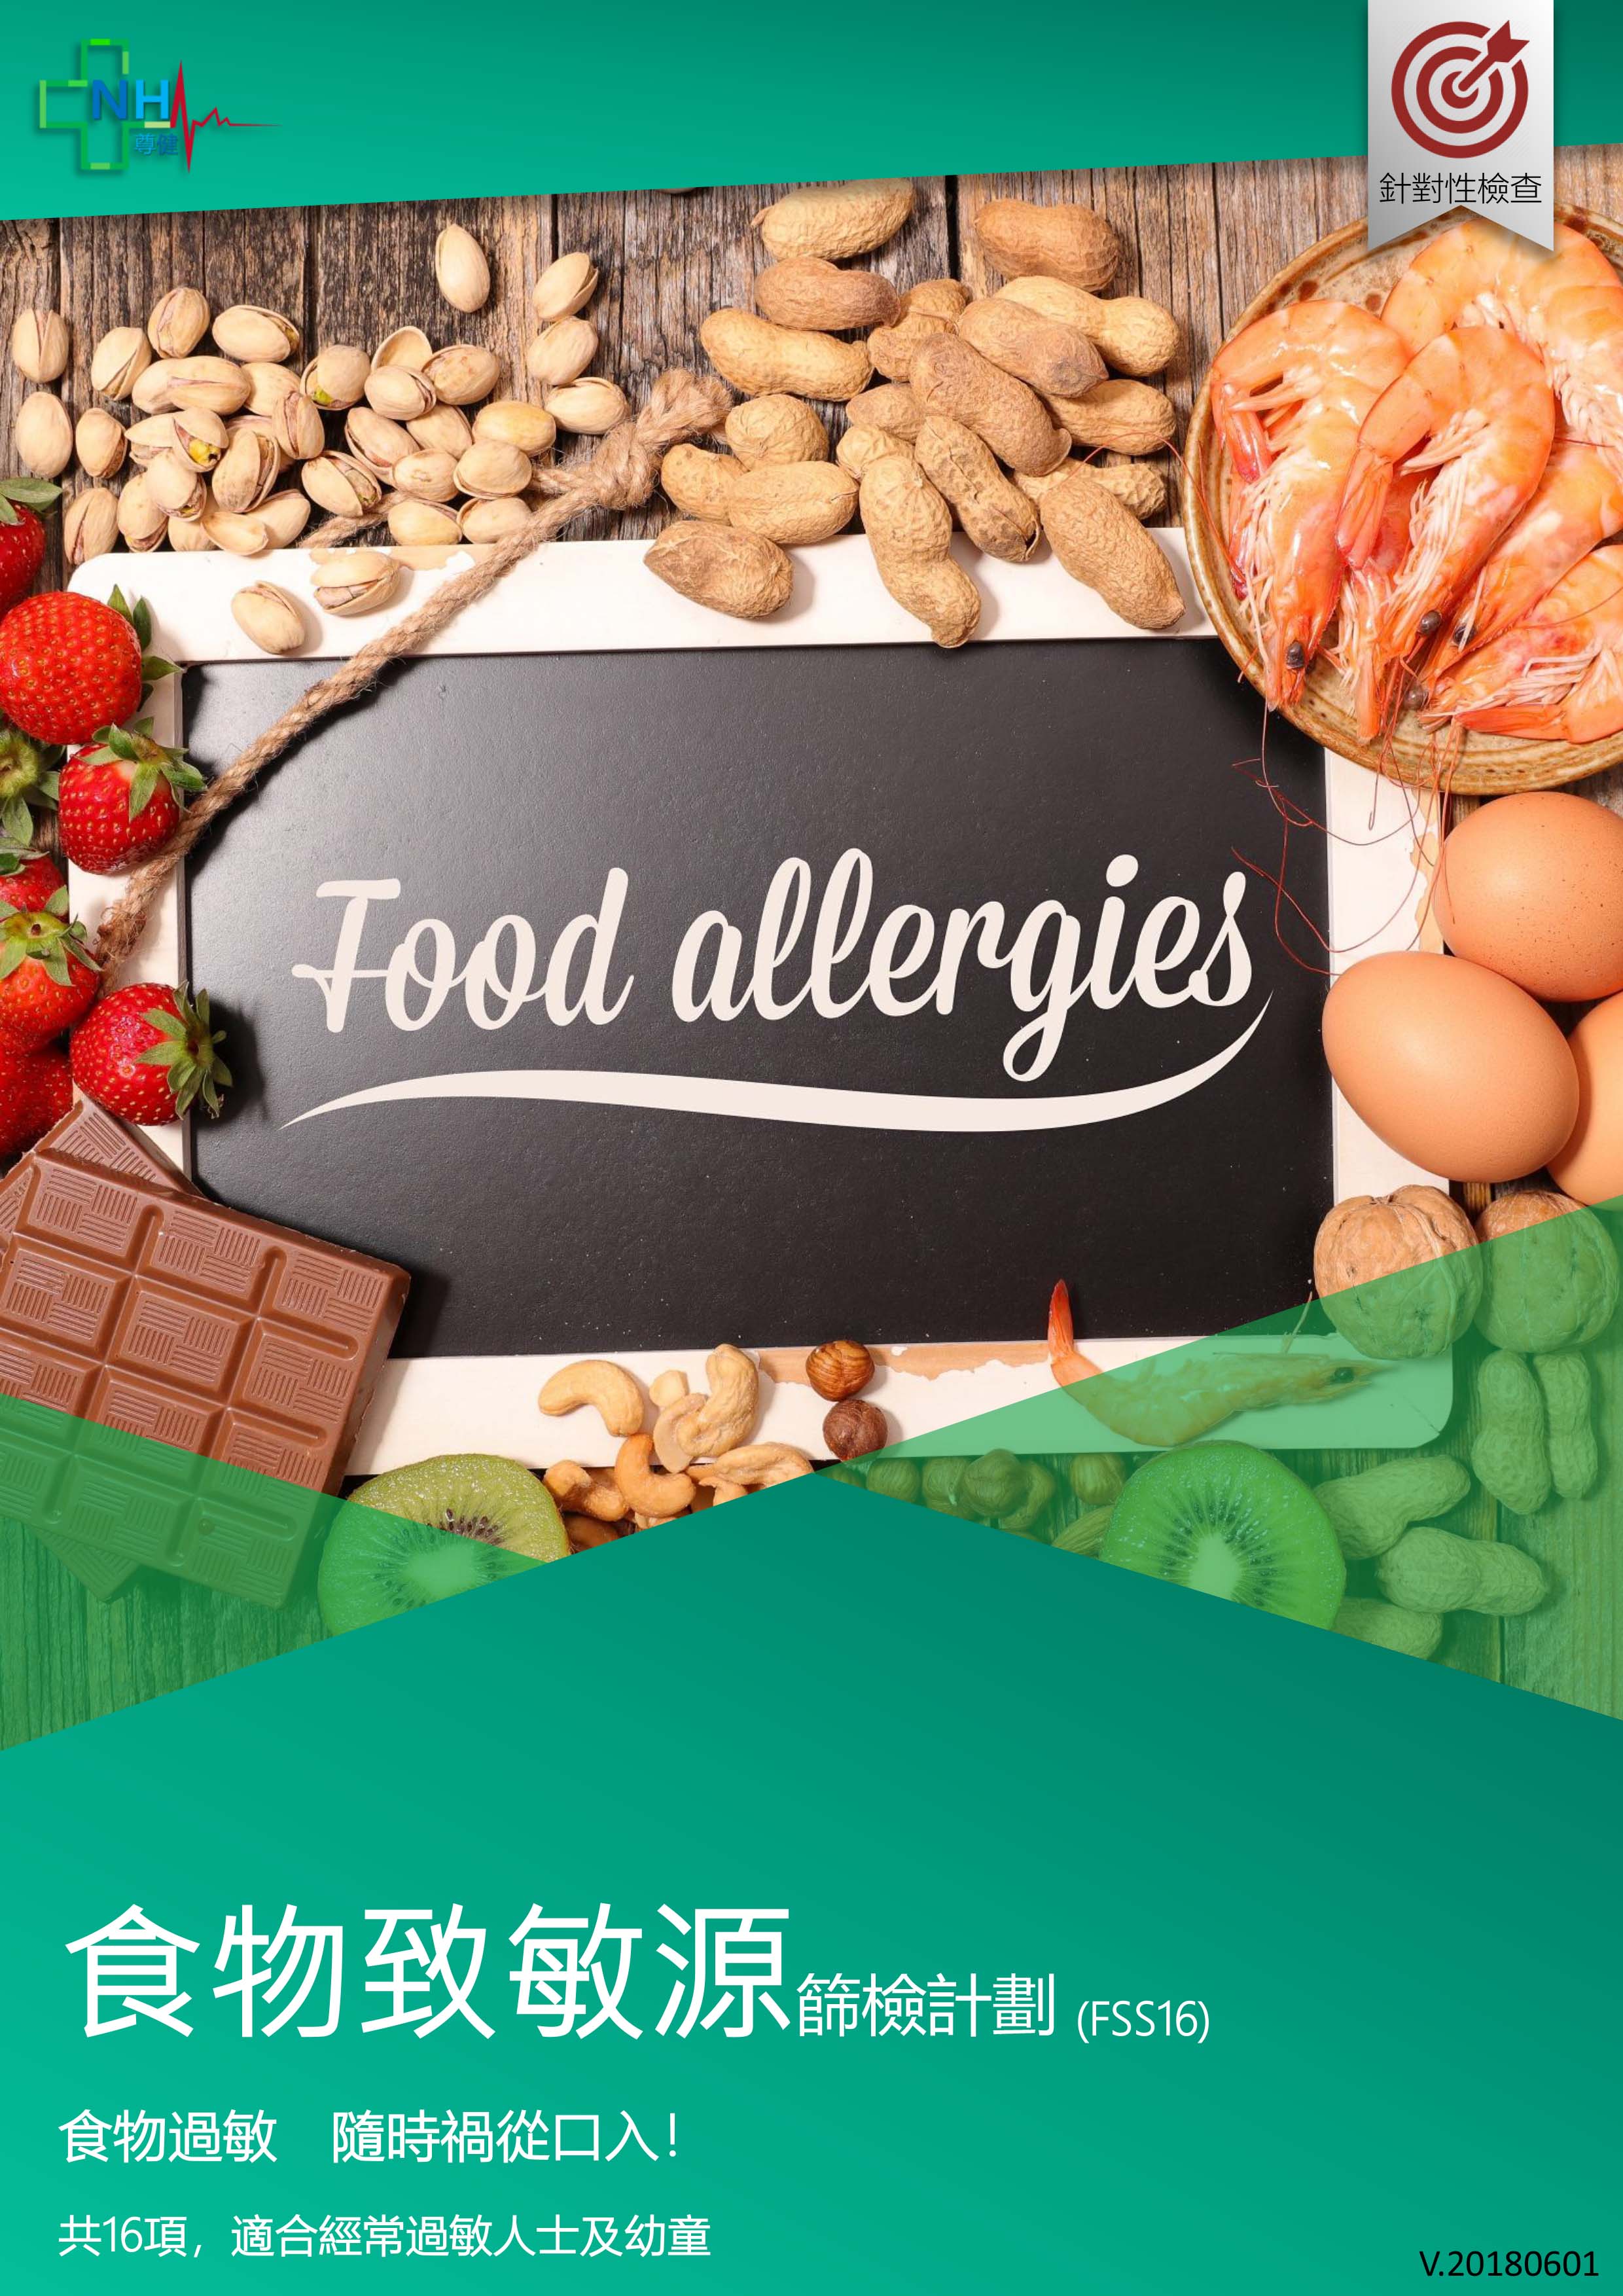 2d-food-allergy-check-1.jpg